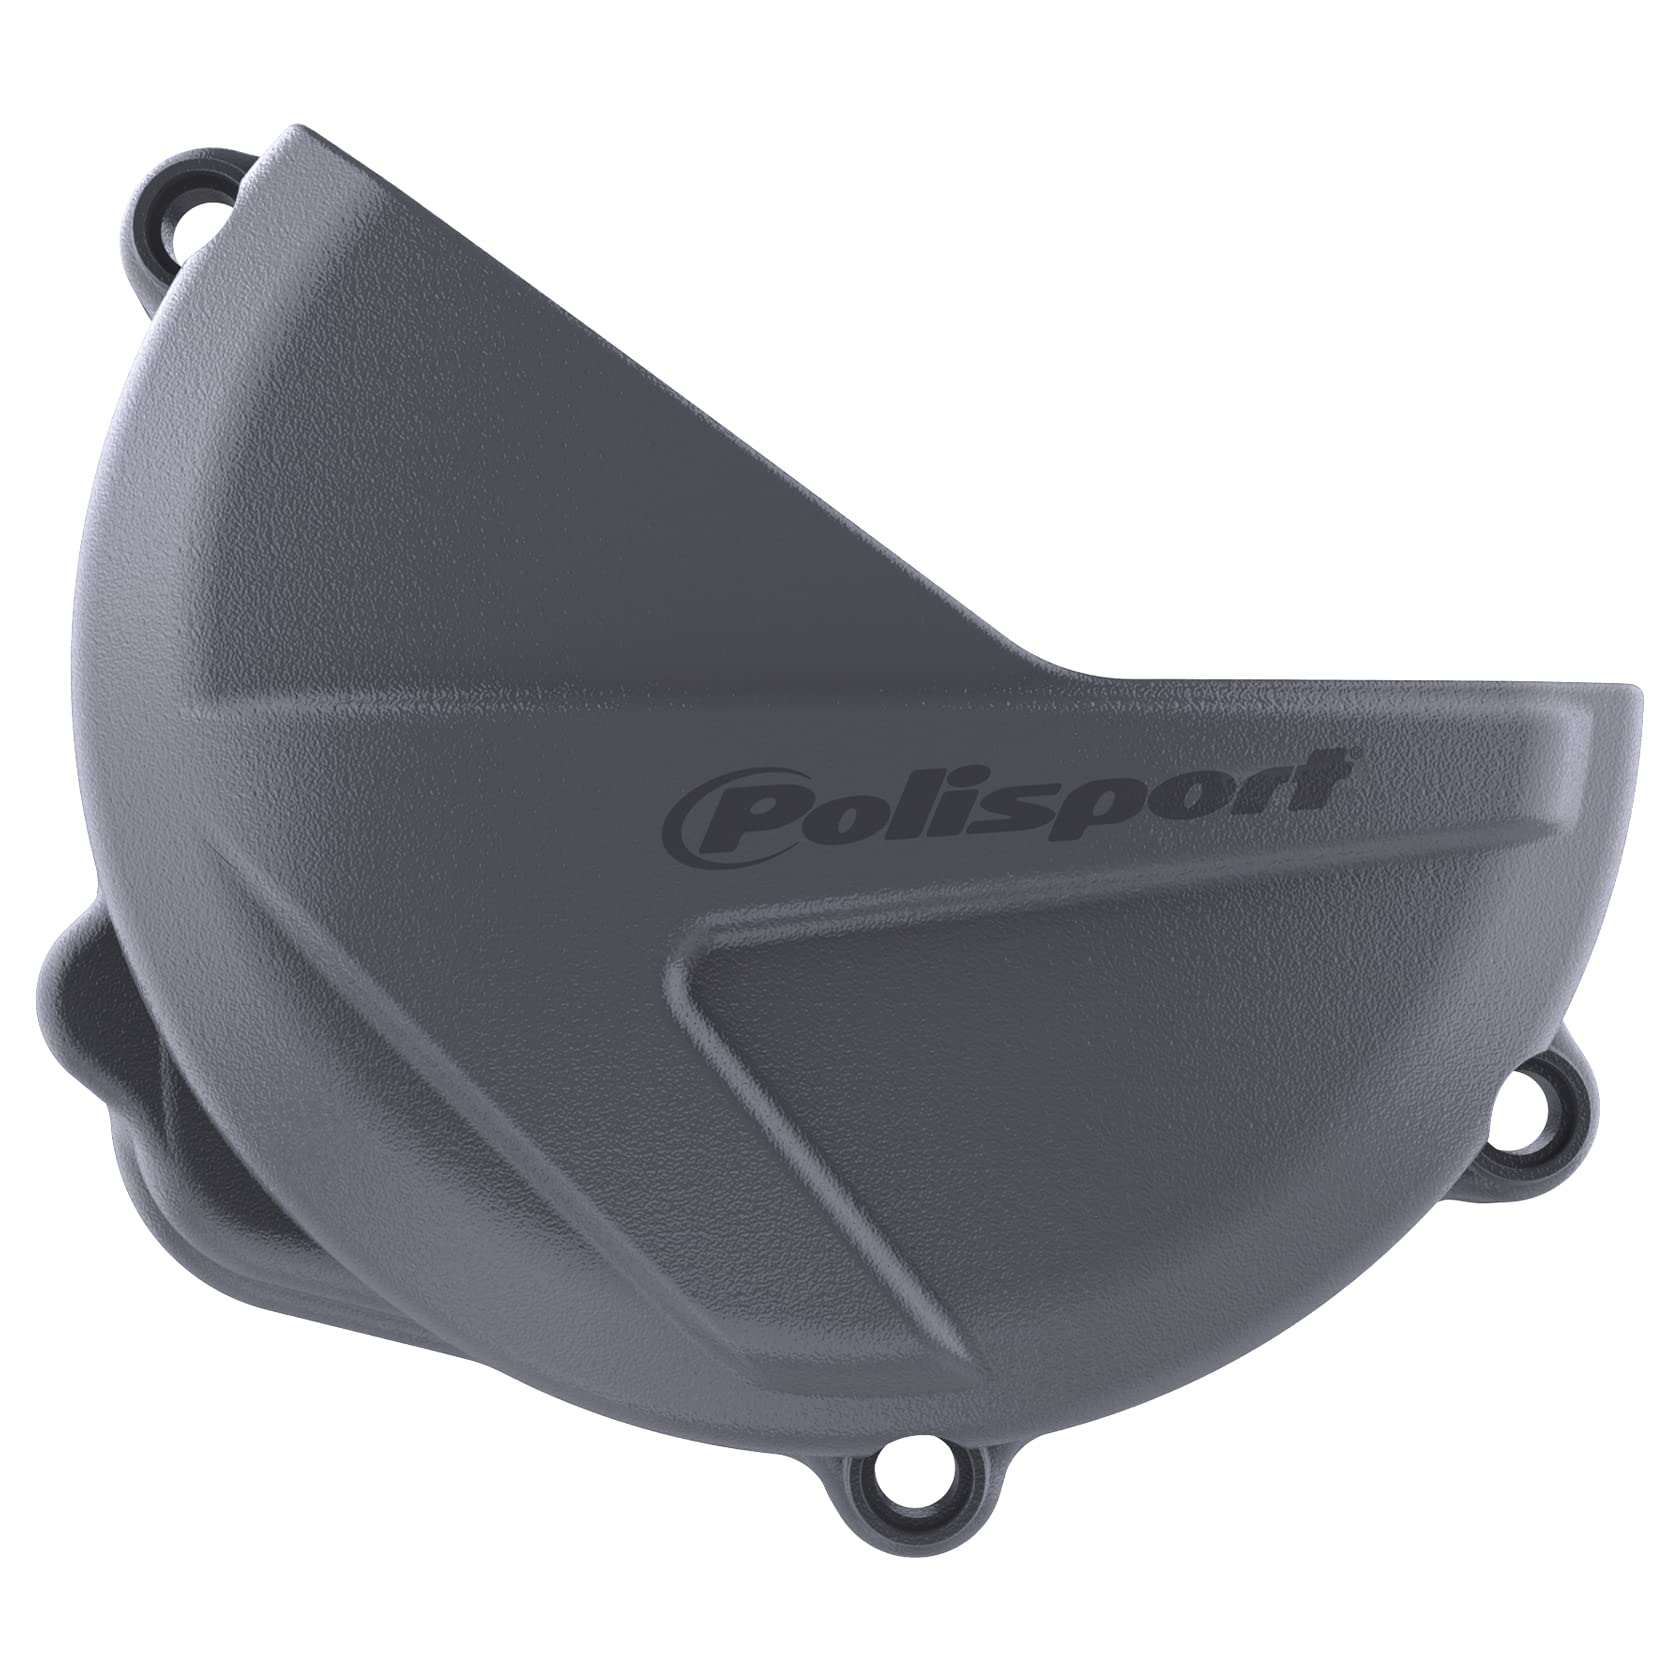 POLISPORT 8465700003 - Kupplungsdeckelschutz aus schlagfestem Polyamid compatible con motocicletas Honda en color nardo grau von Polisport